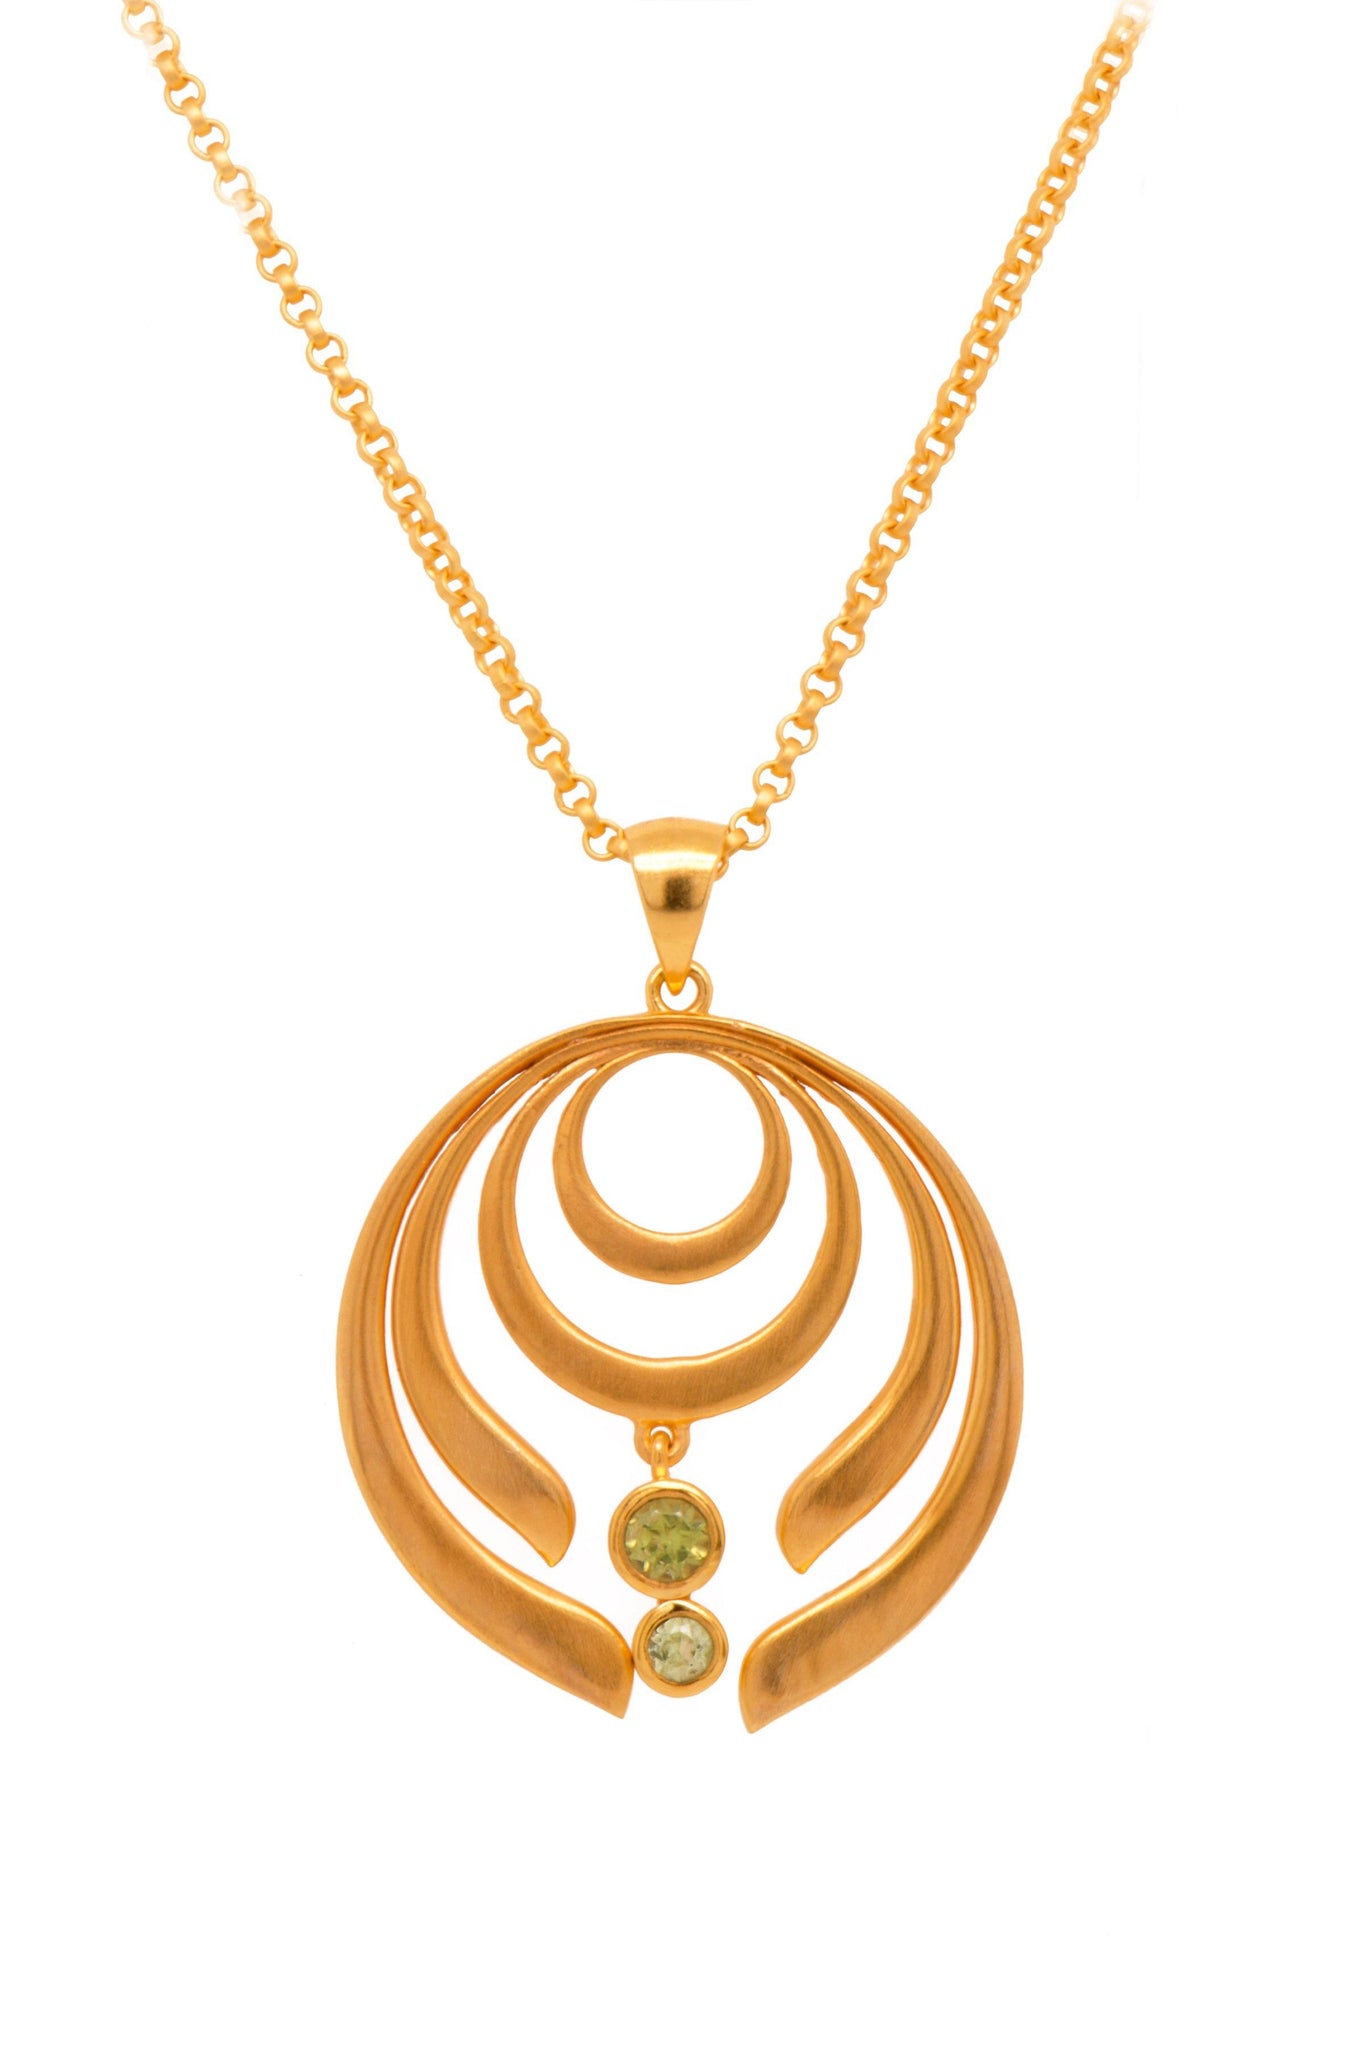 STRENGTH LARGE PERIDOT PENDANT 24K GOLD VERMEIL - Joyla Jewelry